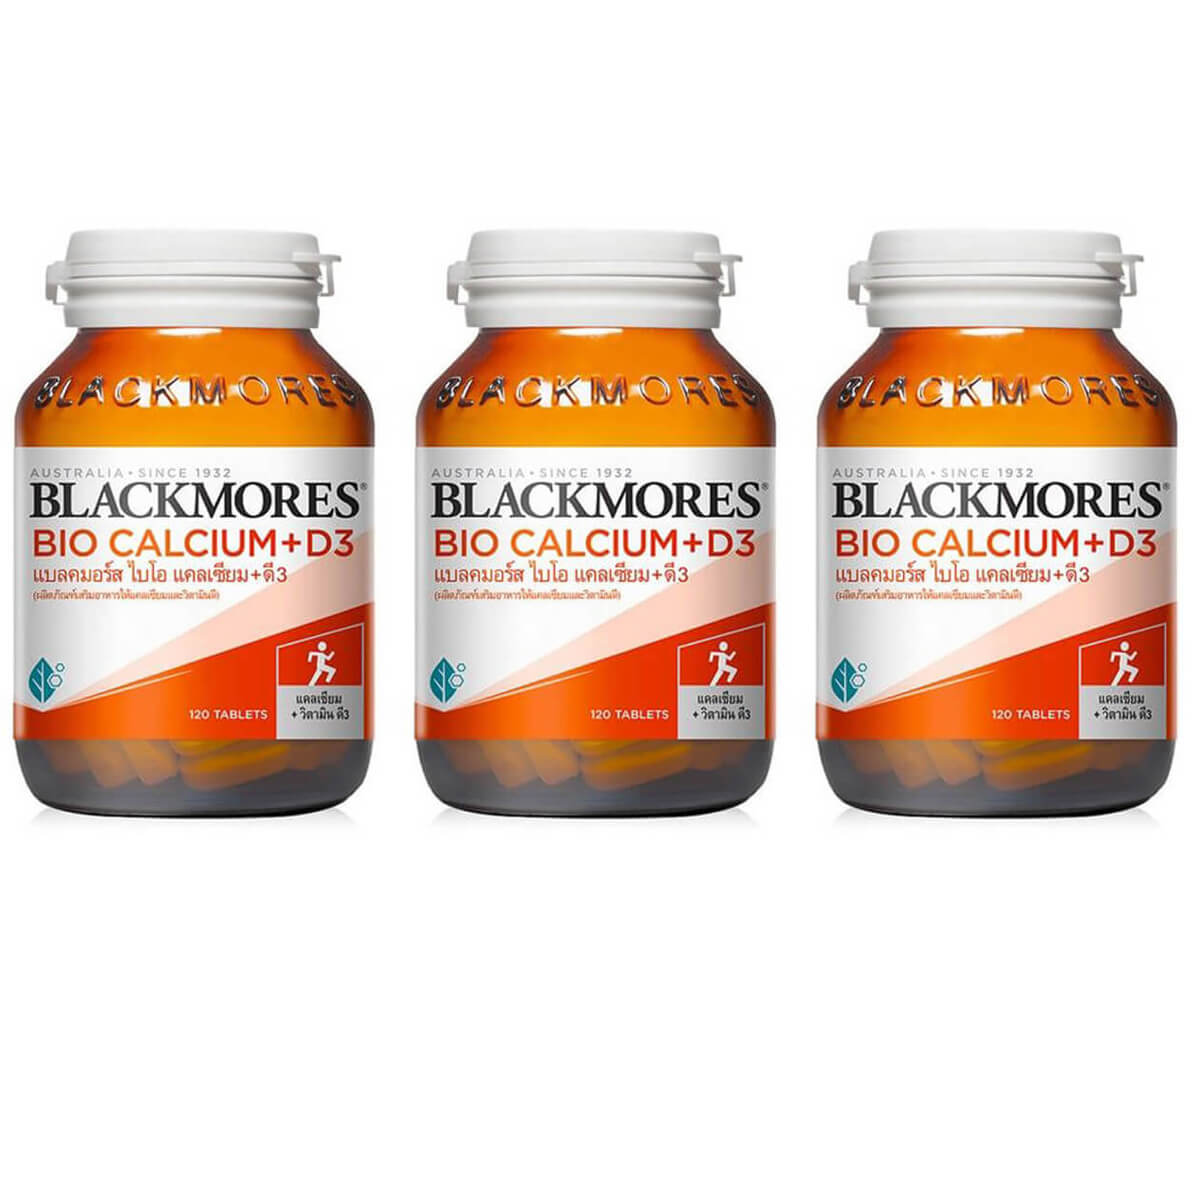 Пищевая добавка Blackmores Bio Calcium + D3, 3 банки по 120 таблеток пищевая добавка blackmores bio calcium d3 120 таблеток